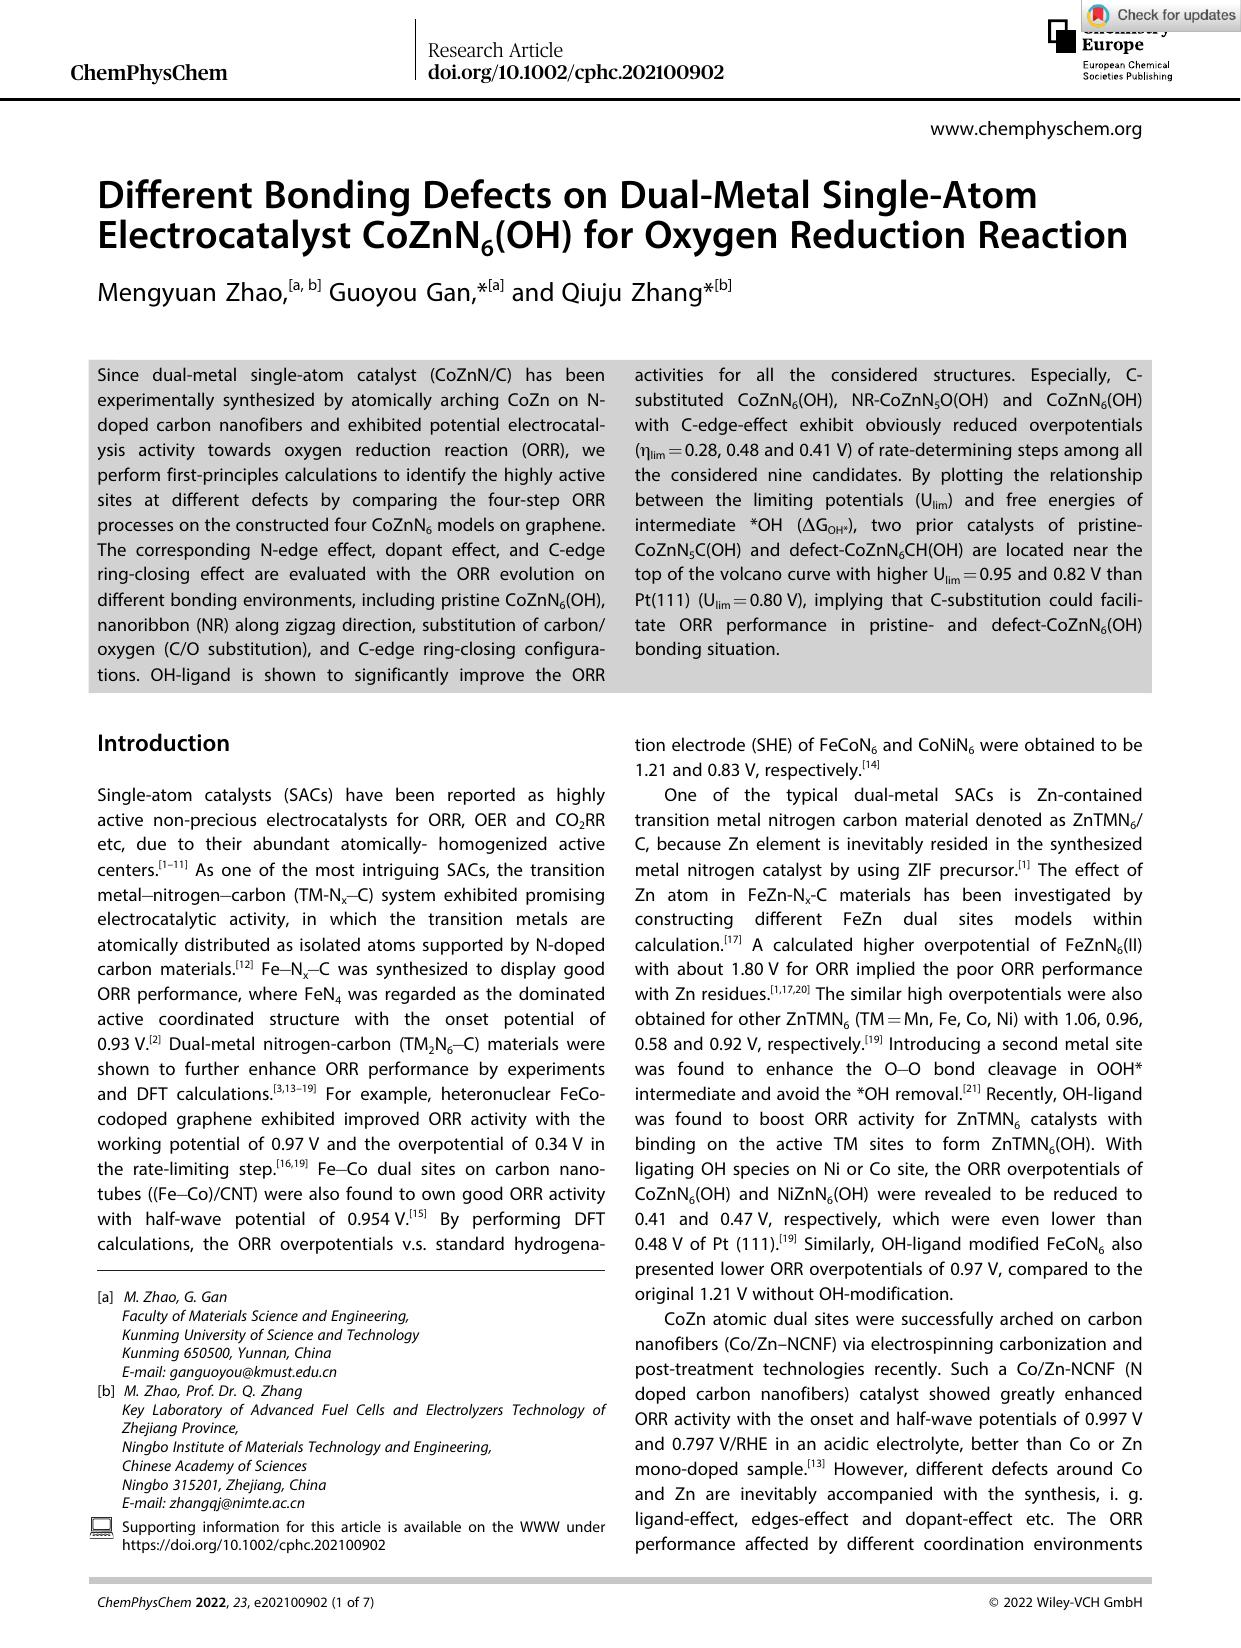 Different Bonding Defects on DualâMetal SingleâAtom Electrocatalyst CoZnN6(OH) for Oxygen Reduction Reaction by Unknown